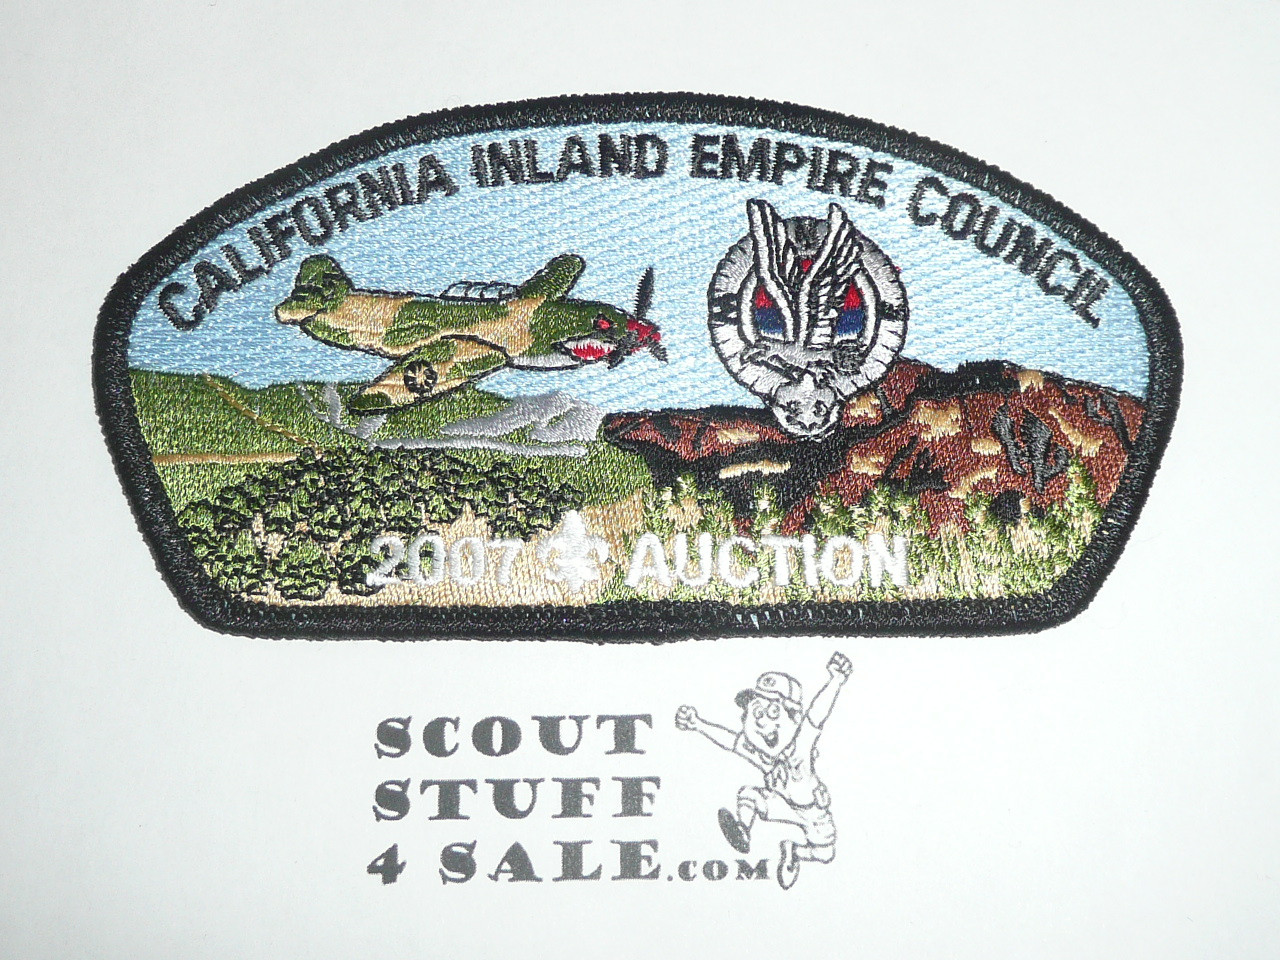 California Inland Empire Council sa139 2007 Auction STAFF CSP - Scout